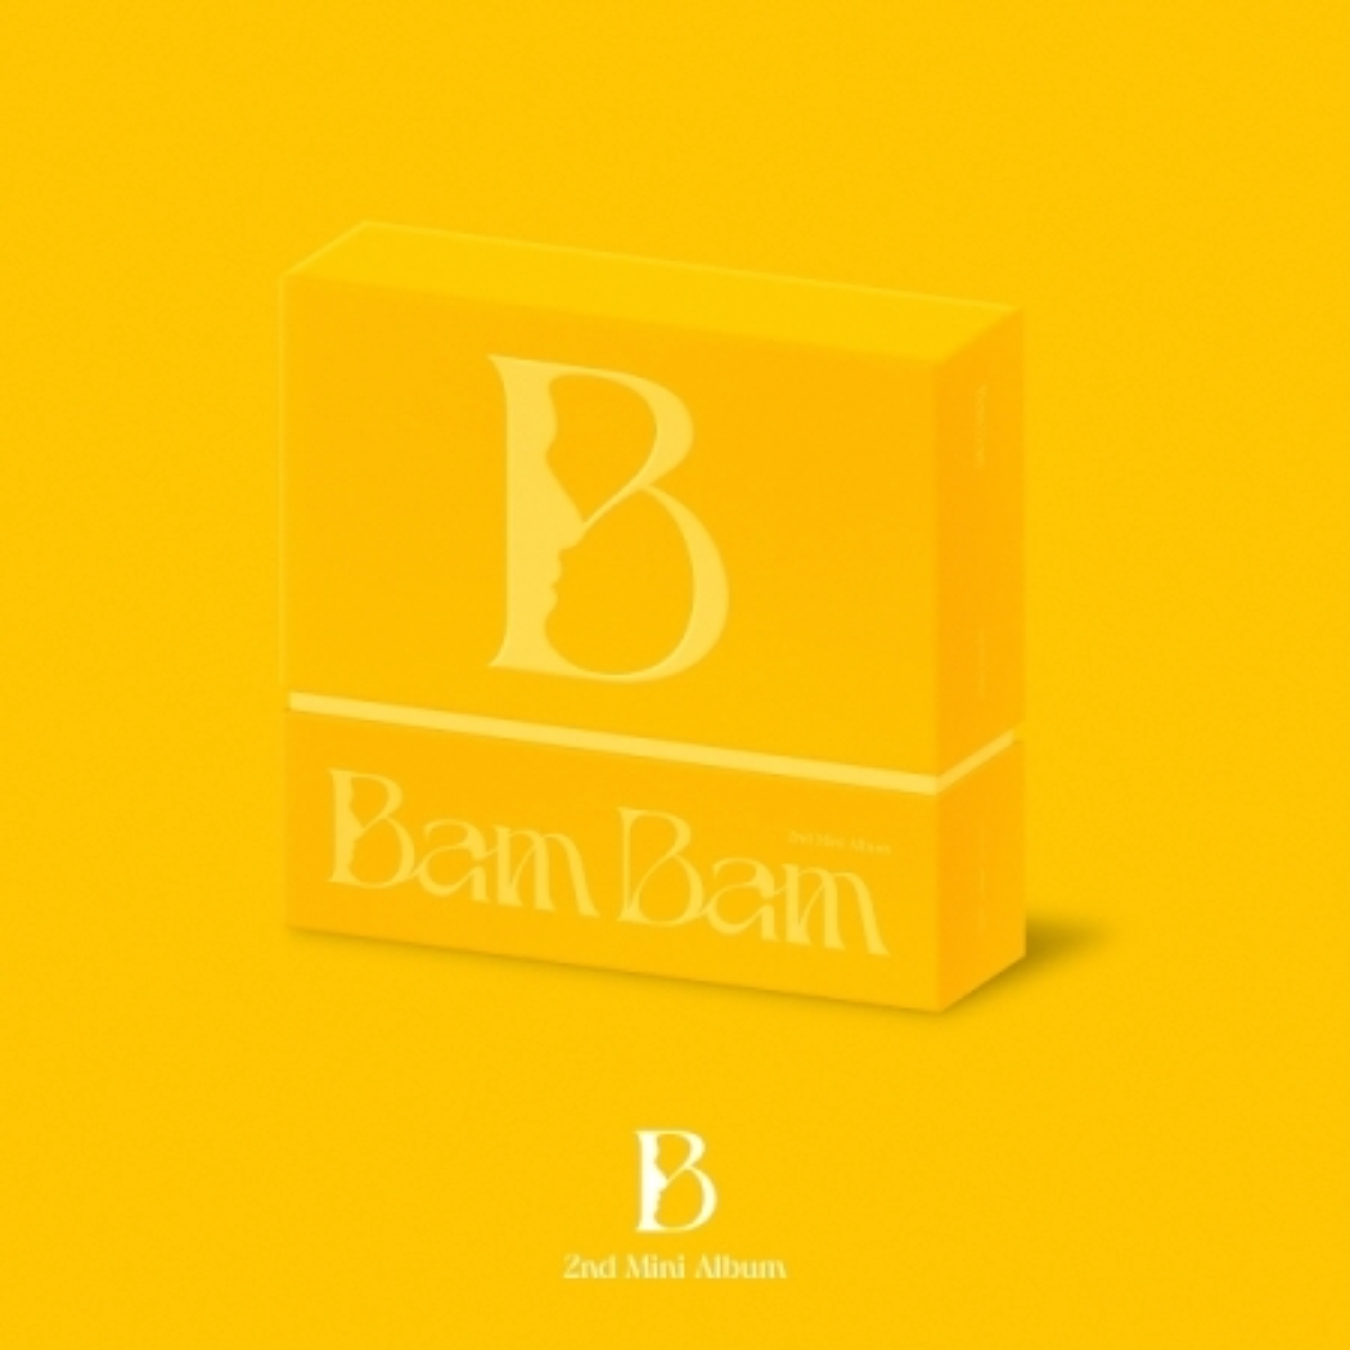 BAMBAM - 2ND MINI ALBUM : B (2 VERSIONS)